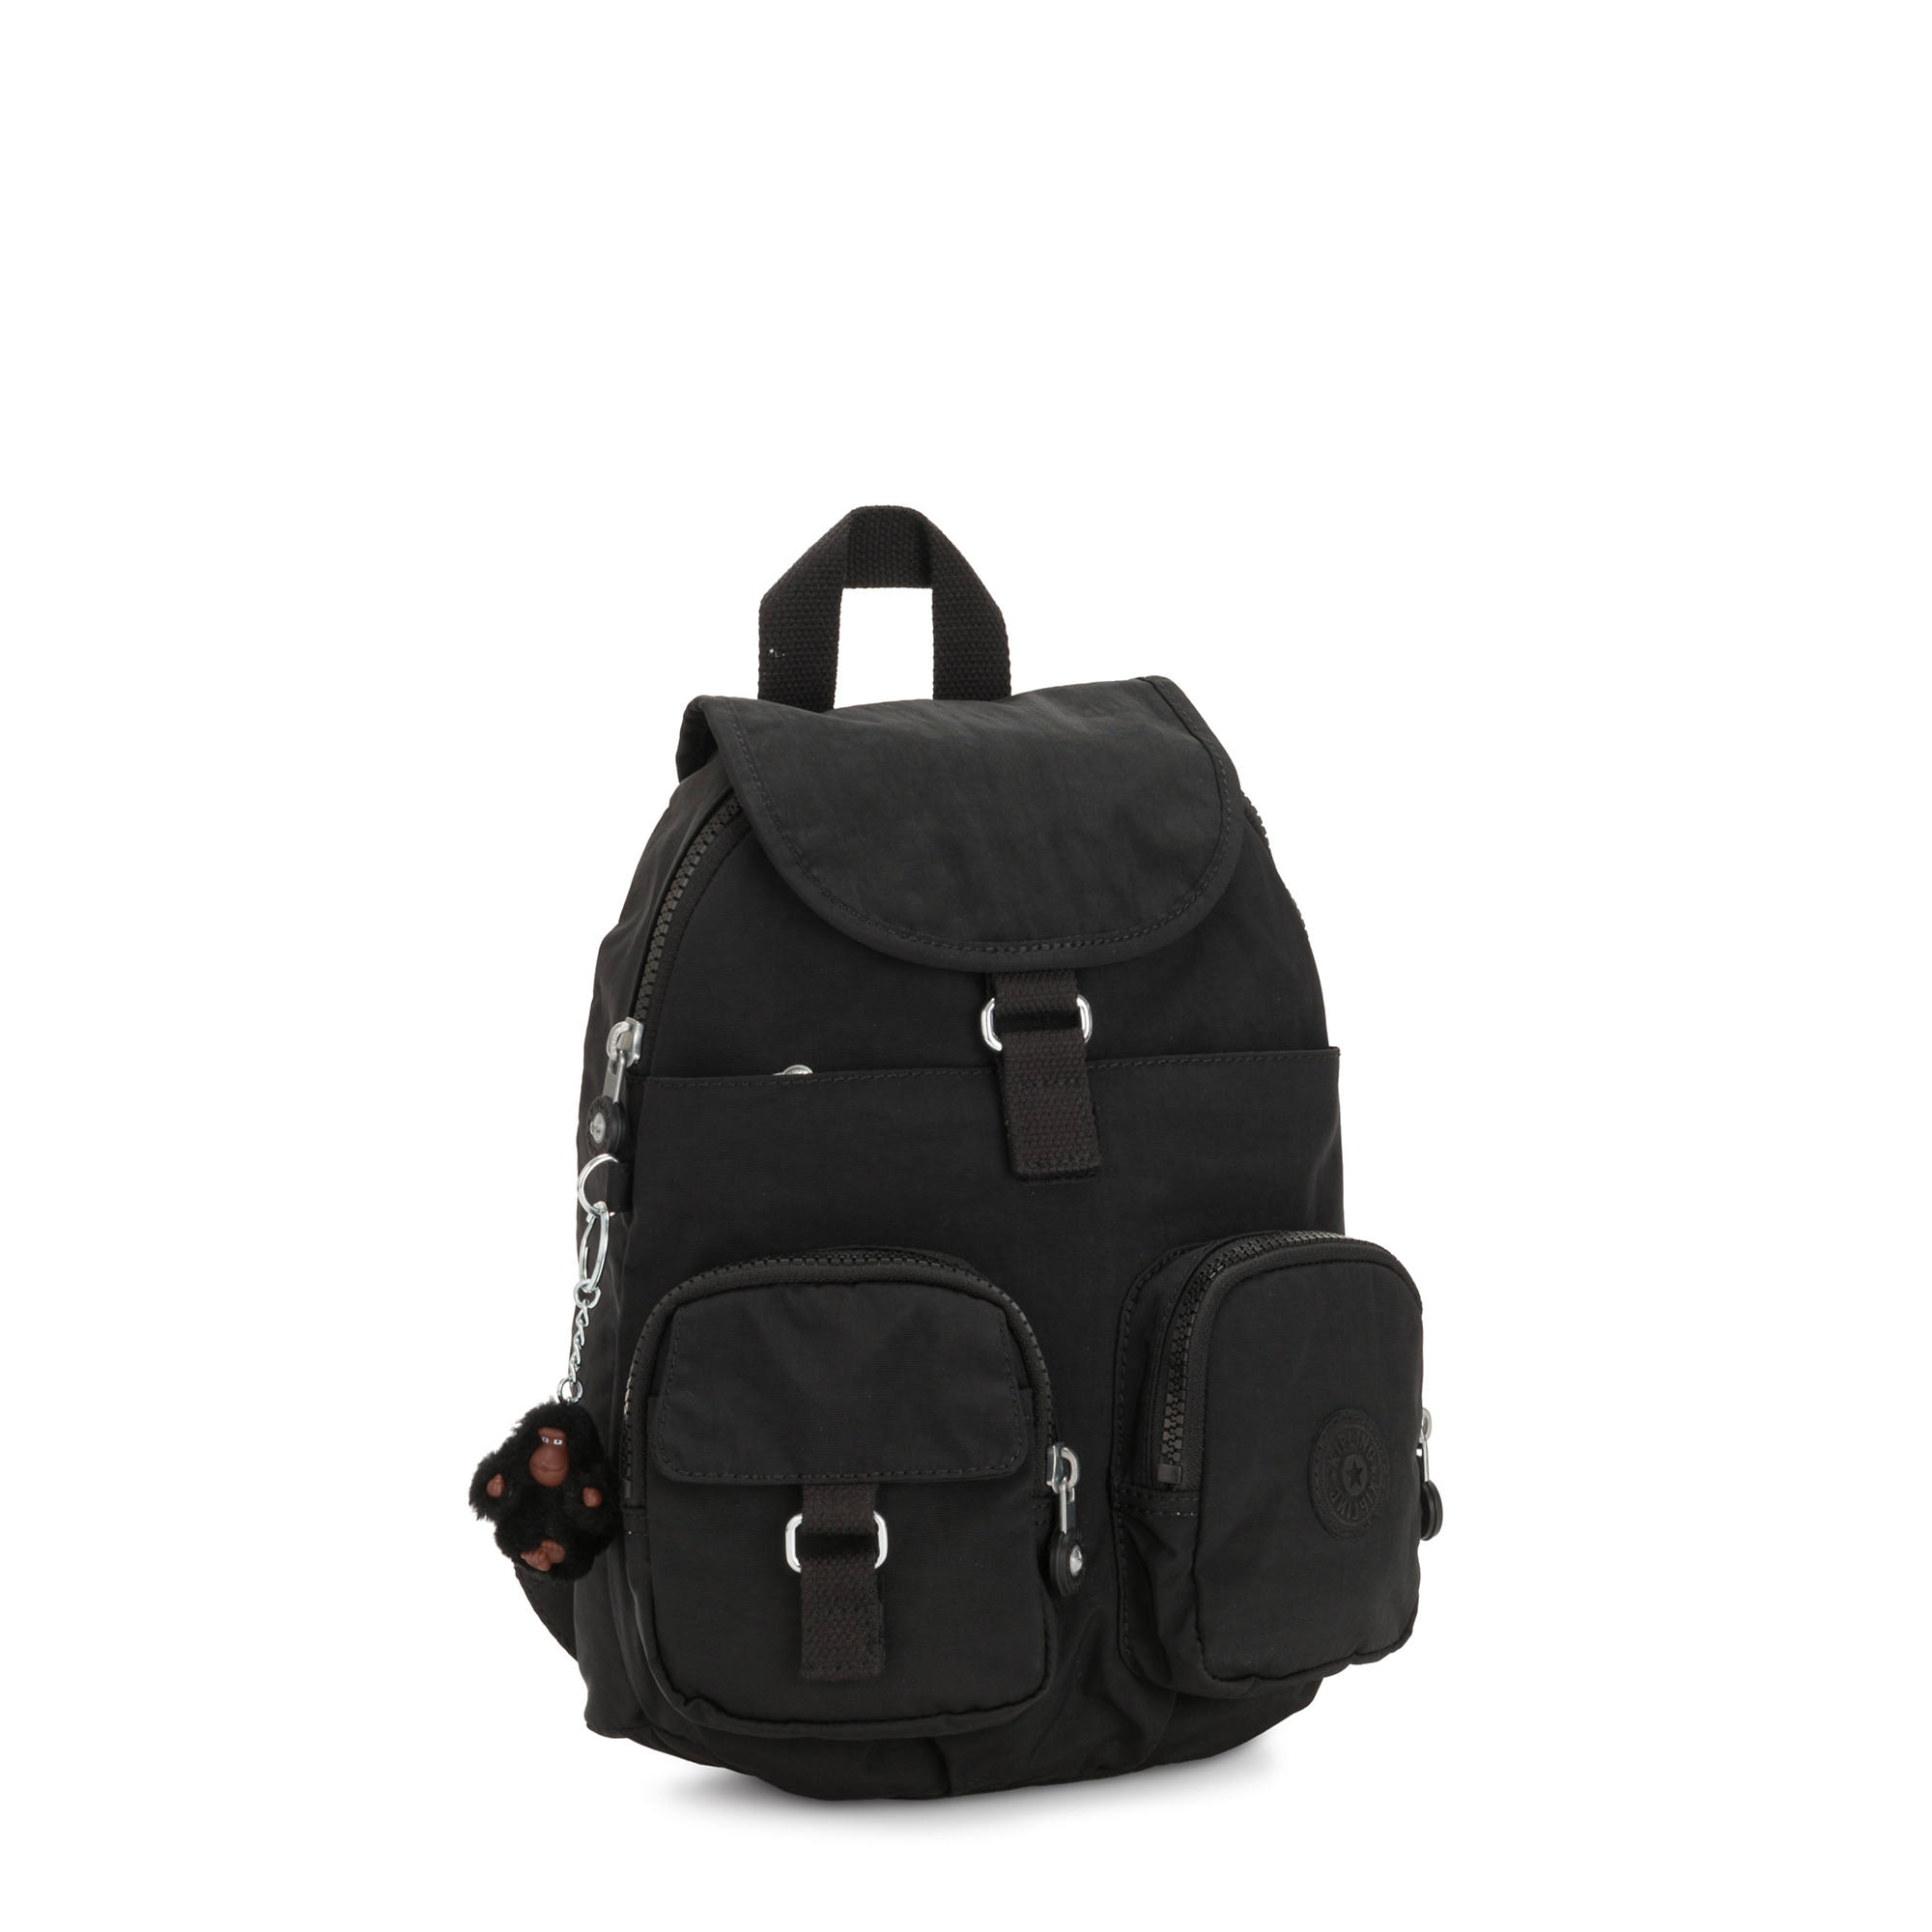 Kipling Lovebug Small Backpack | eBay